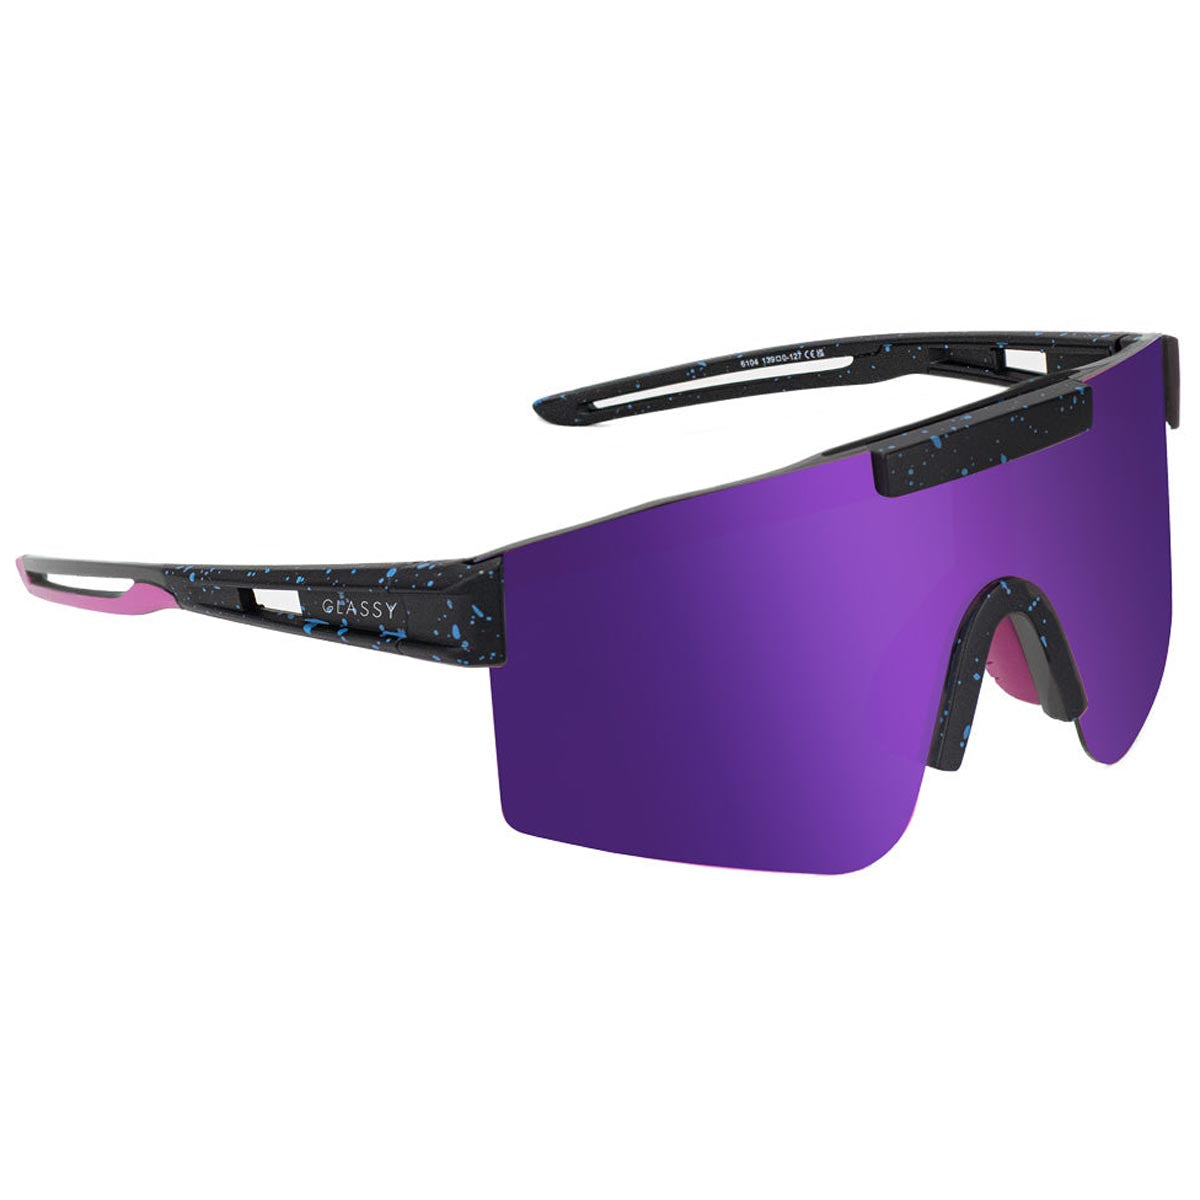 Glassy Salt Plus Polarized Sunglasses - Black/Purple Mirror